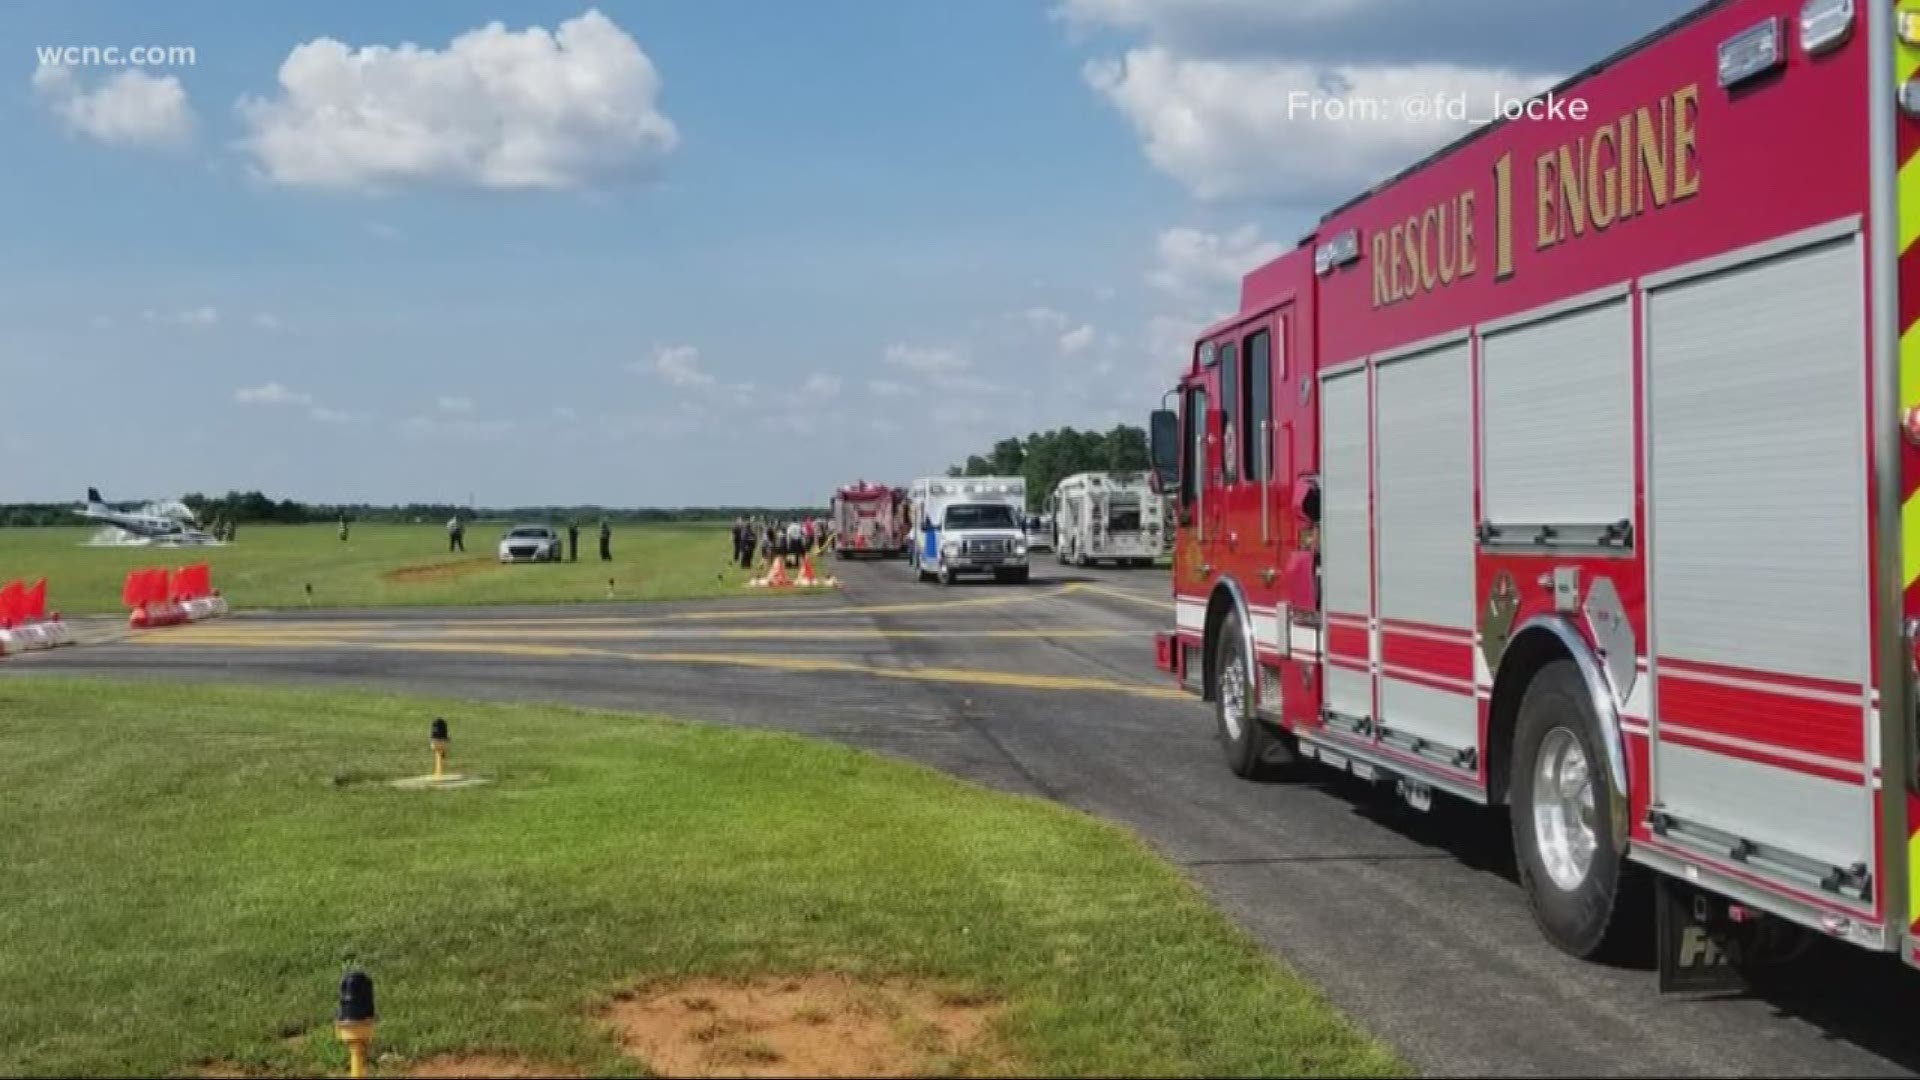 Small plane crashes at Mid-Carolina Airport, no injuries reported